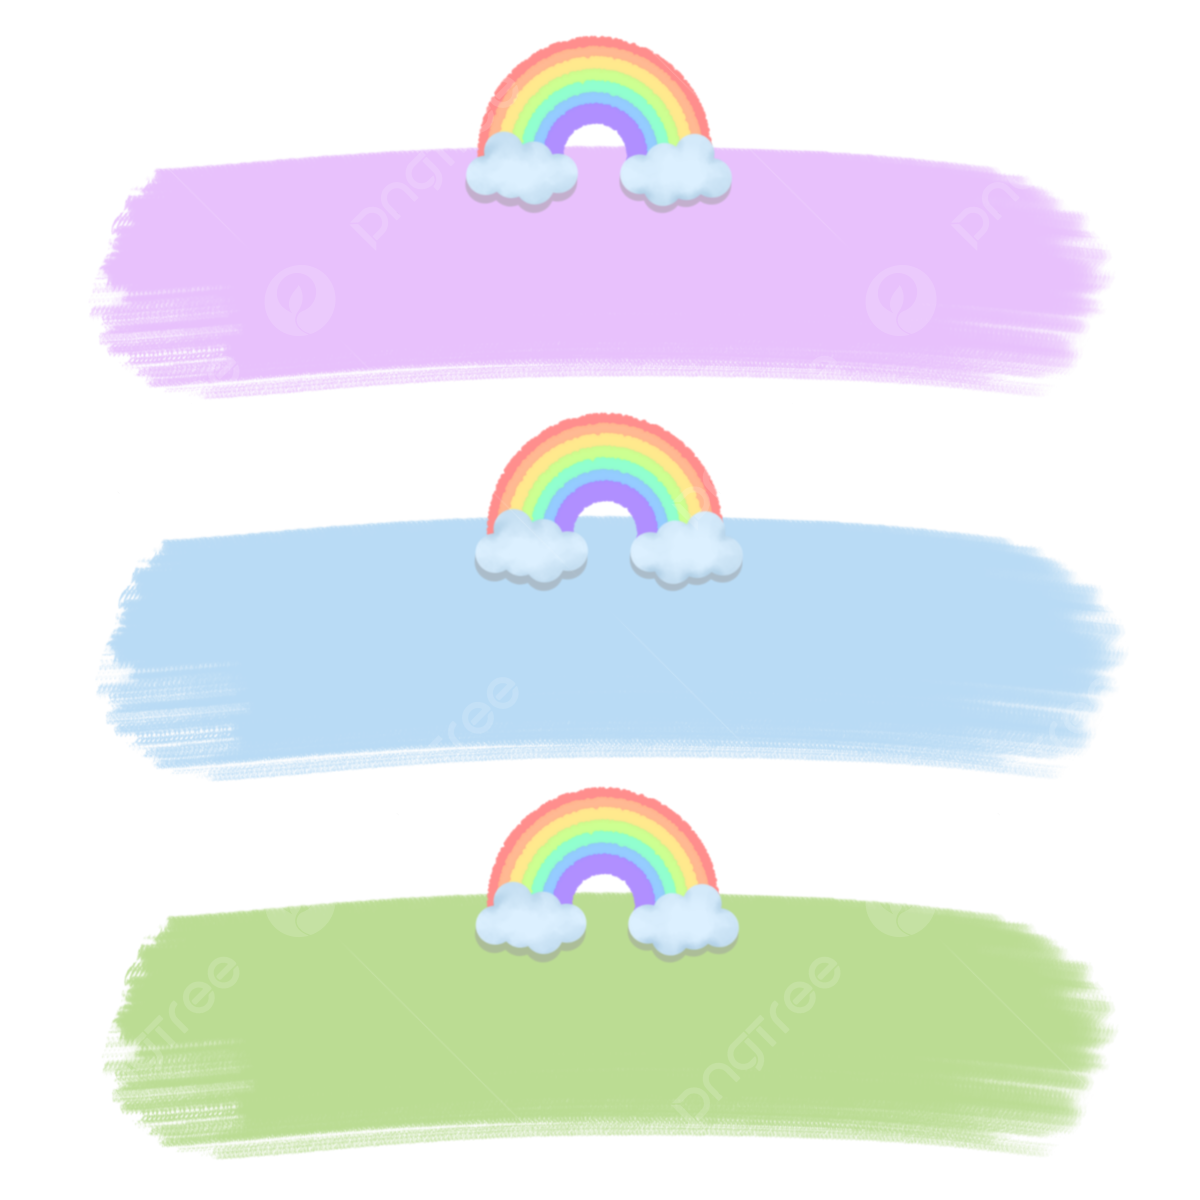 Cute Name Tag Hd Transparent Cute Rainbow Name Tag Name Tag Label Cute Rainbow PNG Image For Free Download